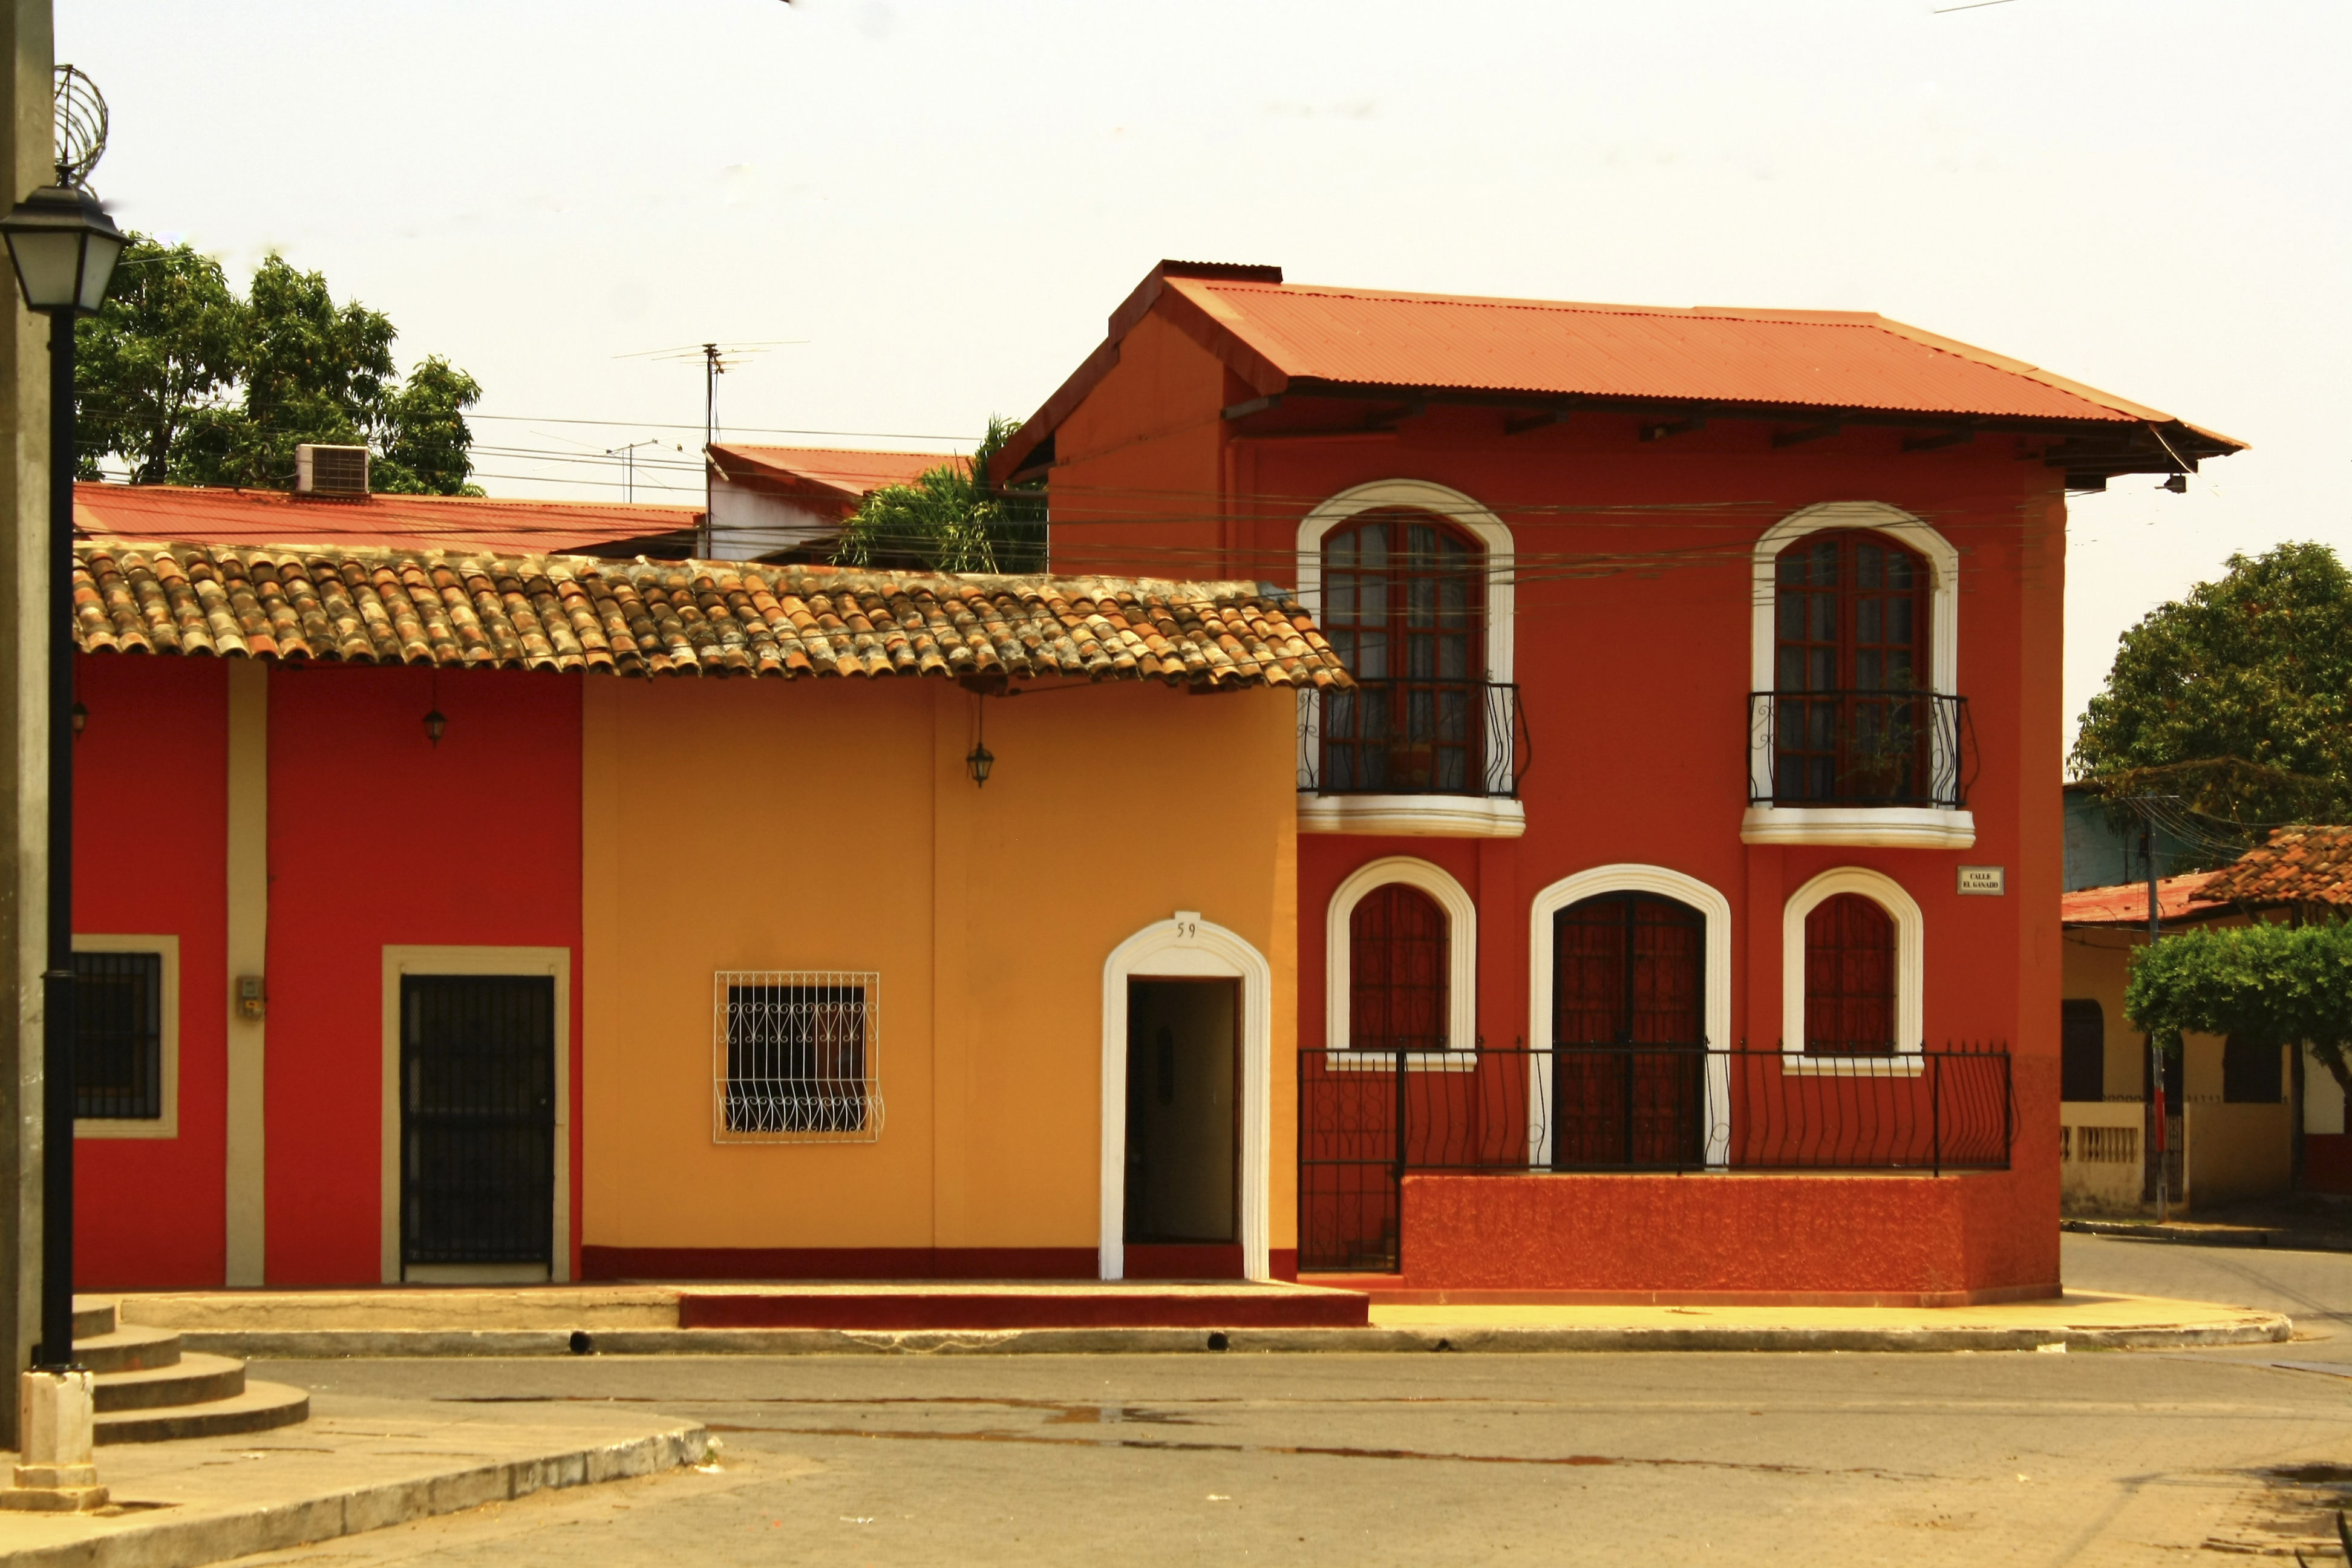 Calles de Granada Centro Histórico, Granada, Nicaragua